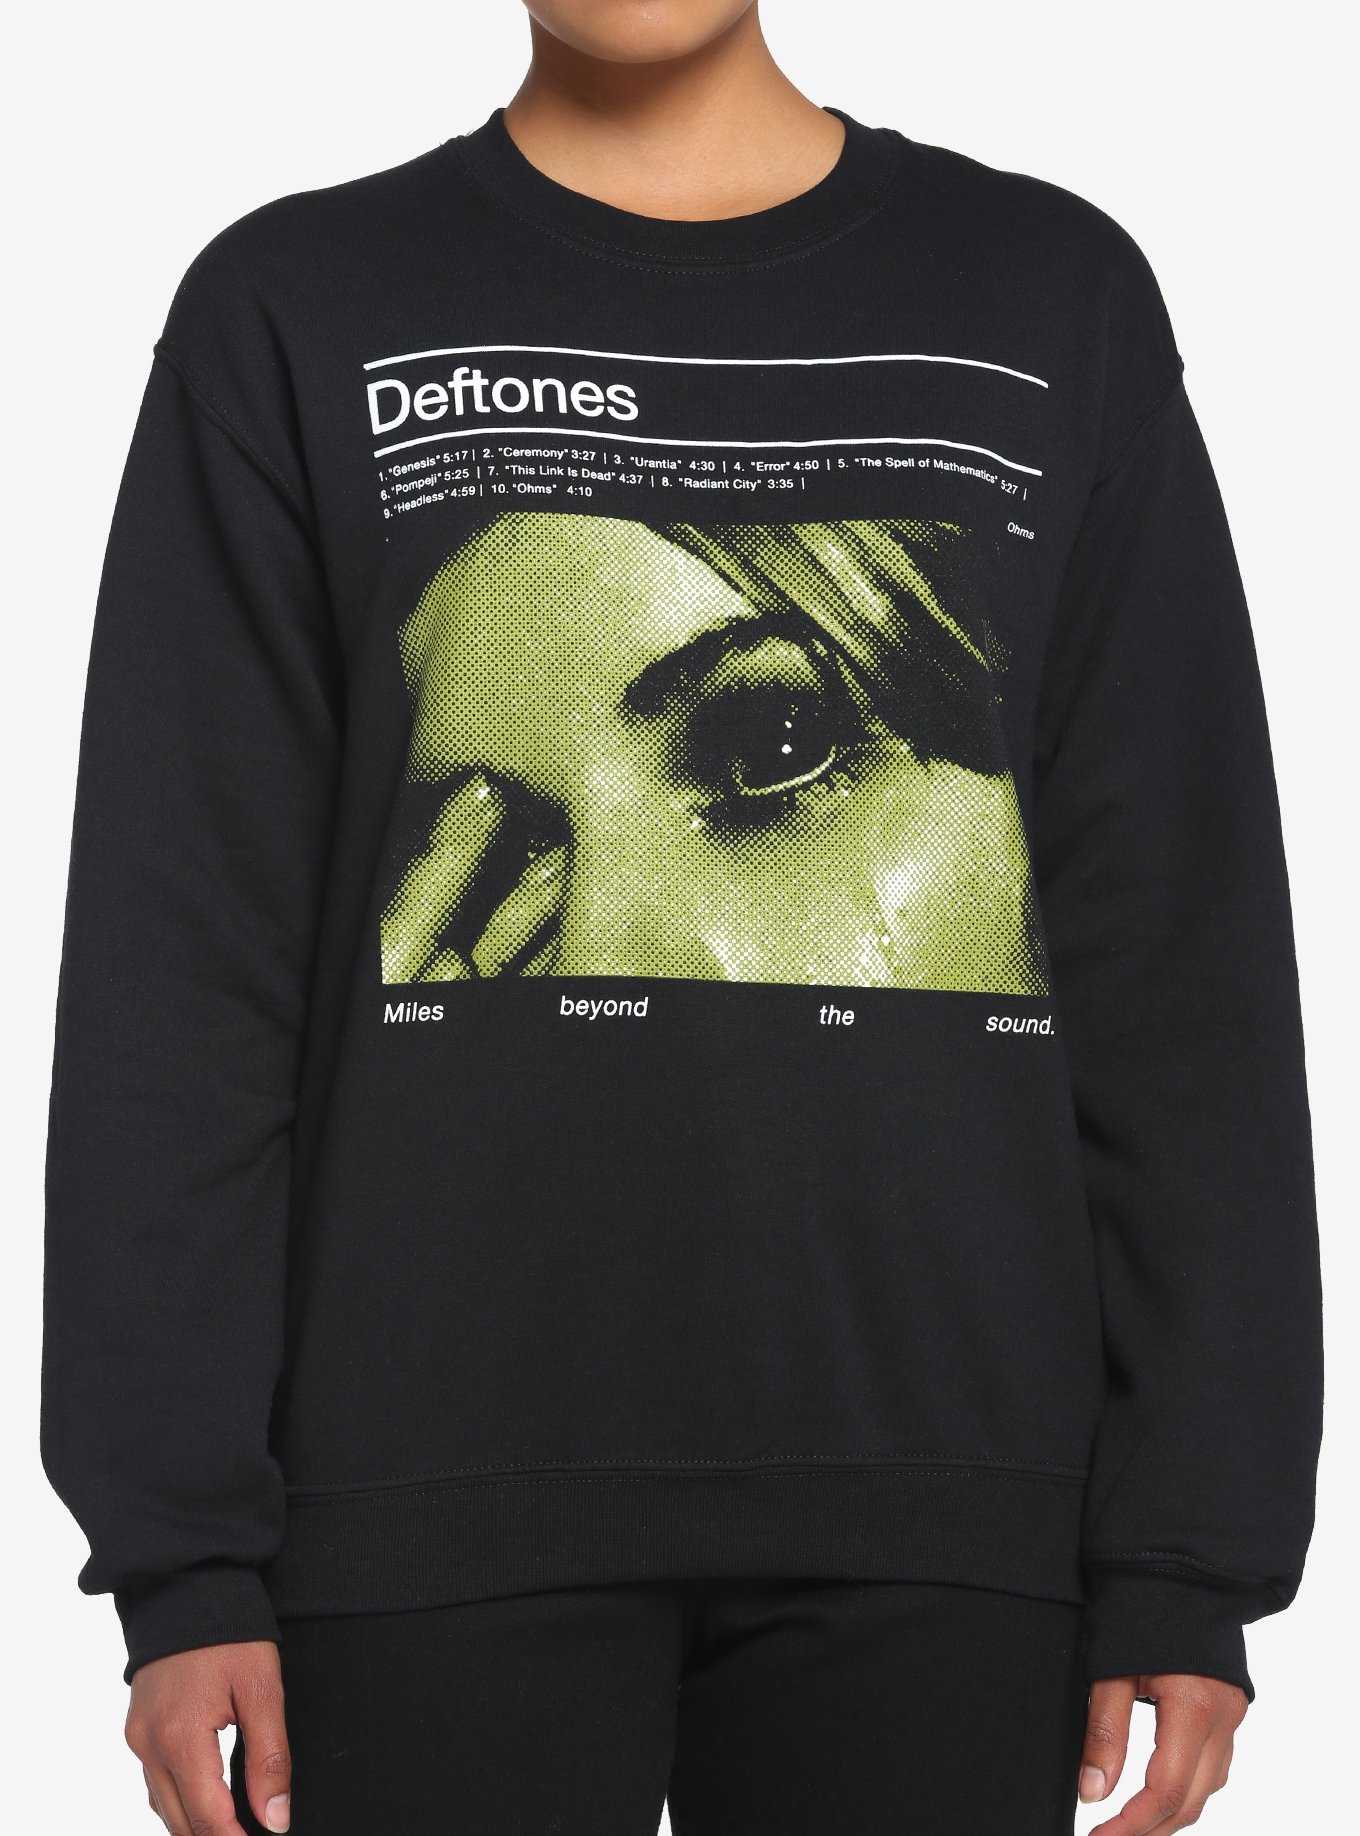 Limited Edition Deftones T-Shirt #2 - Mazeshirt